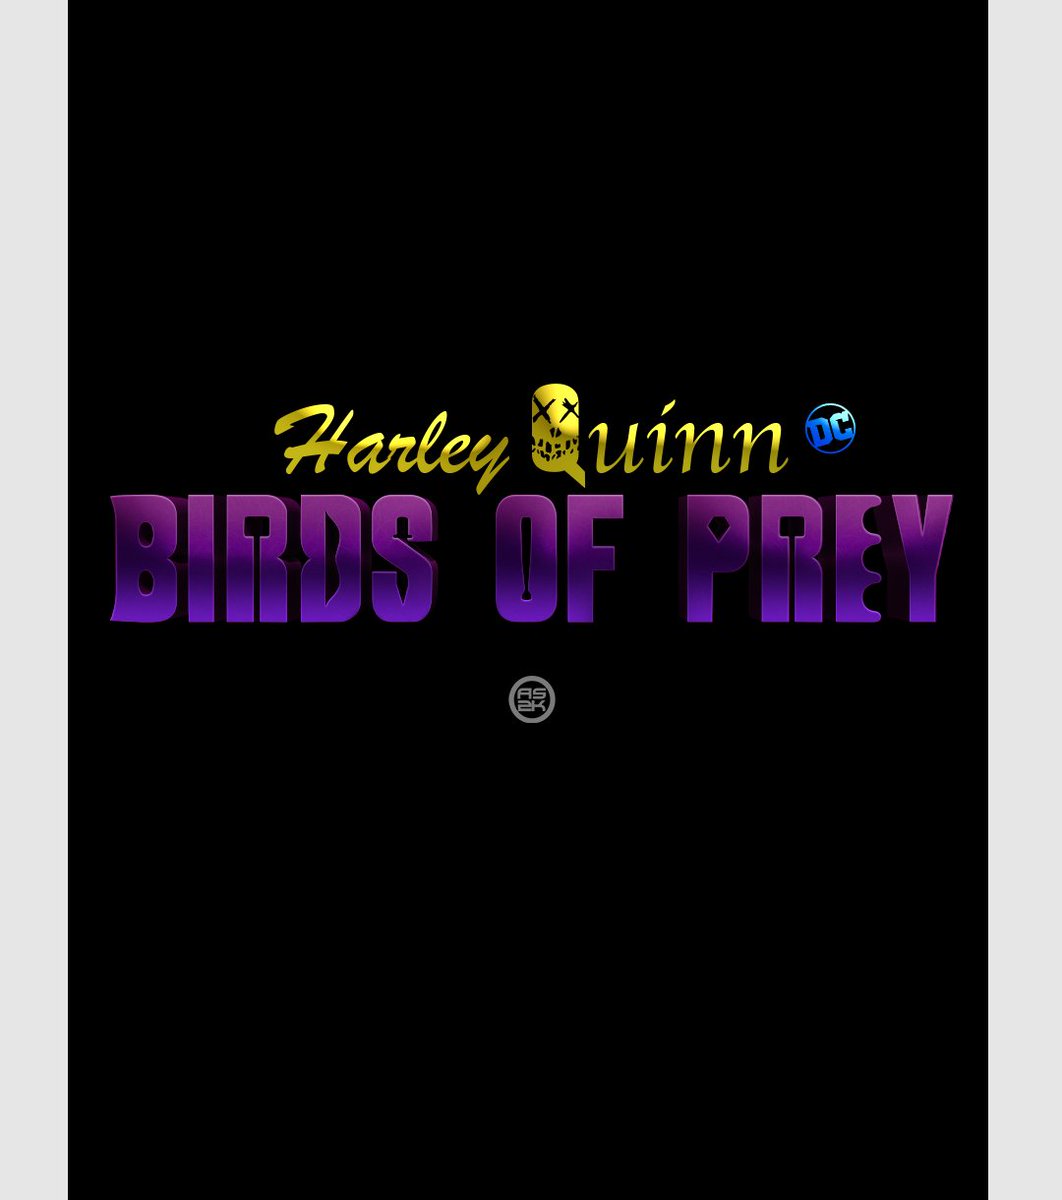 So saw #birdsofprey pretty good black canary and harley 😍
#comicbook #screenrant #harleyquinn #dc #dctv #dcmemes #dcedit #harleyquinnedit #joker #batman #gothat #jaredleto #joaquinphoenix @birdsofprey #dceu #injustice2 #darknight #blackcanary #arrowverse #greenarrow #smallville